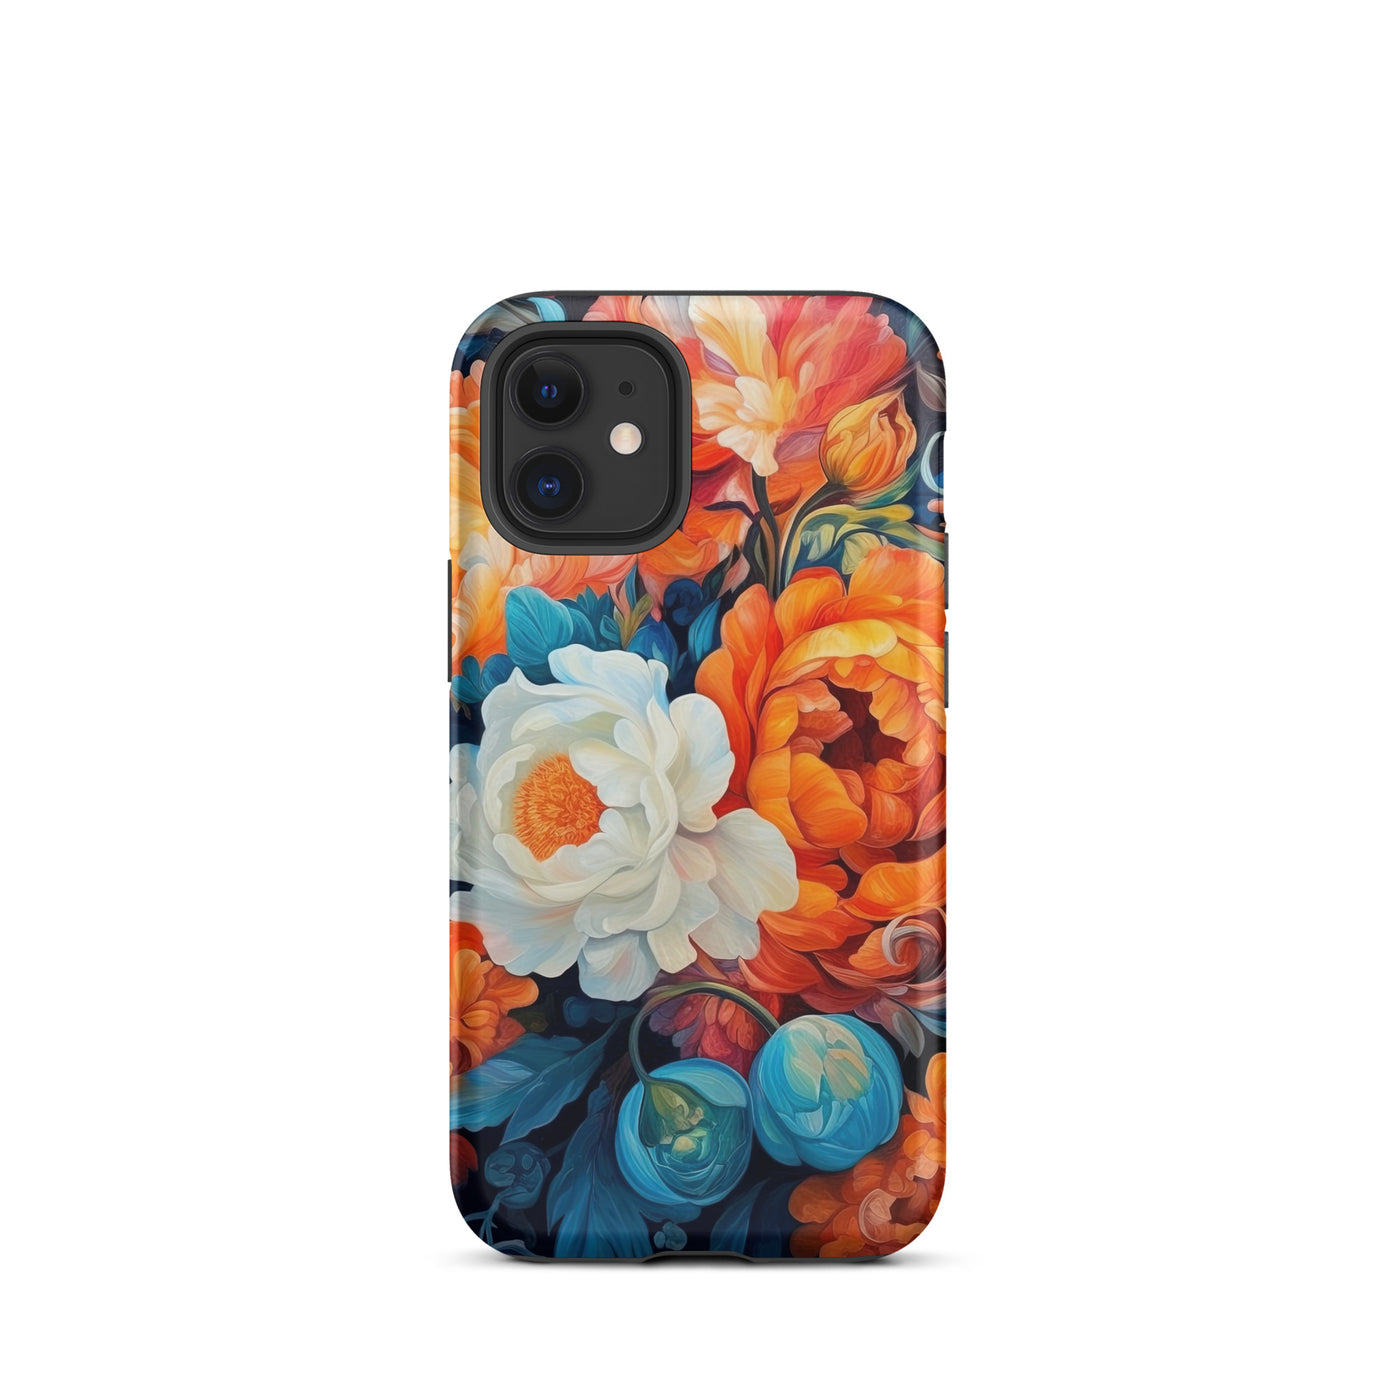 Bunte Blumen - Schöne Malerei - iPhone Schutzhülle (robust) camping xxx iPhone 12 mini